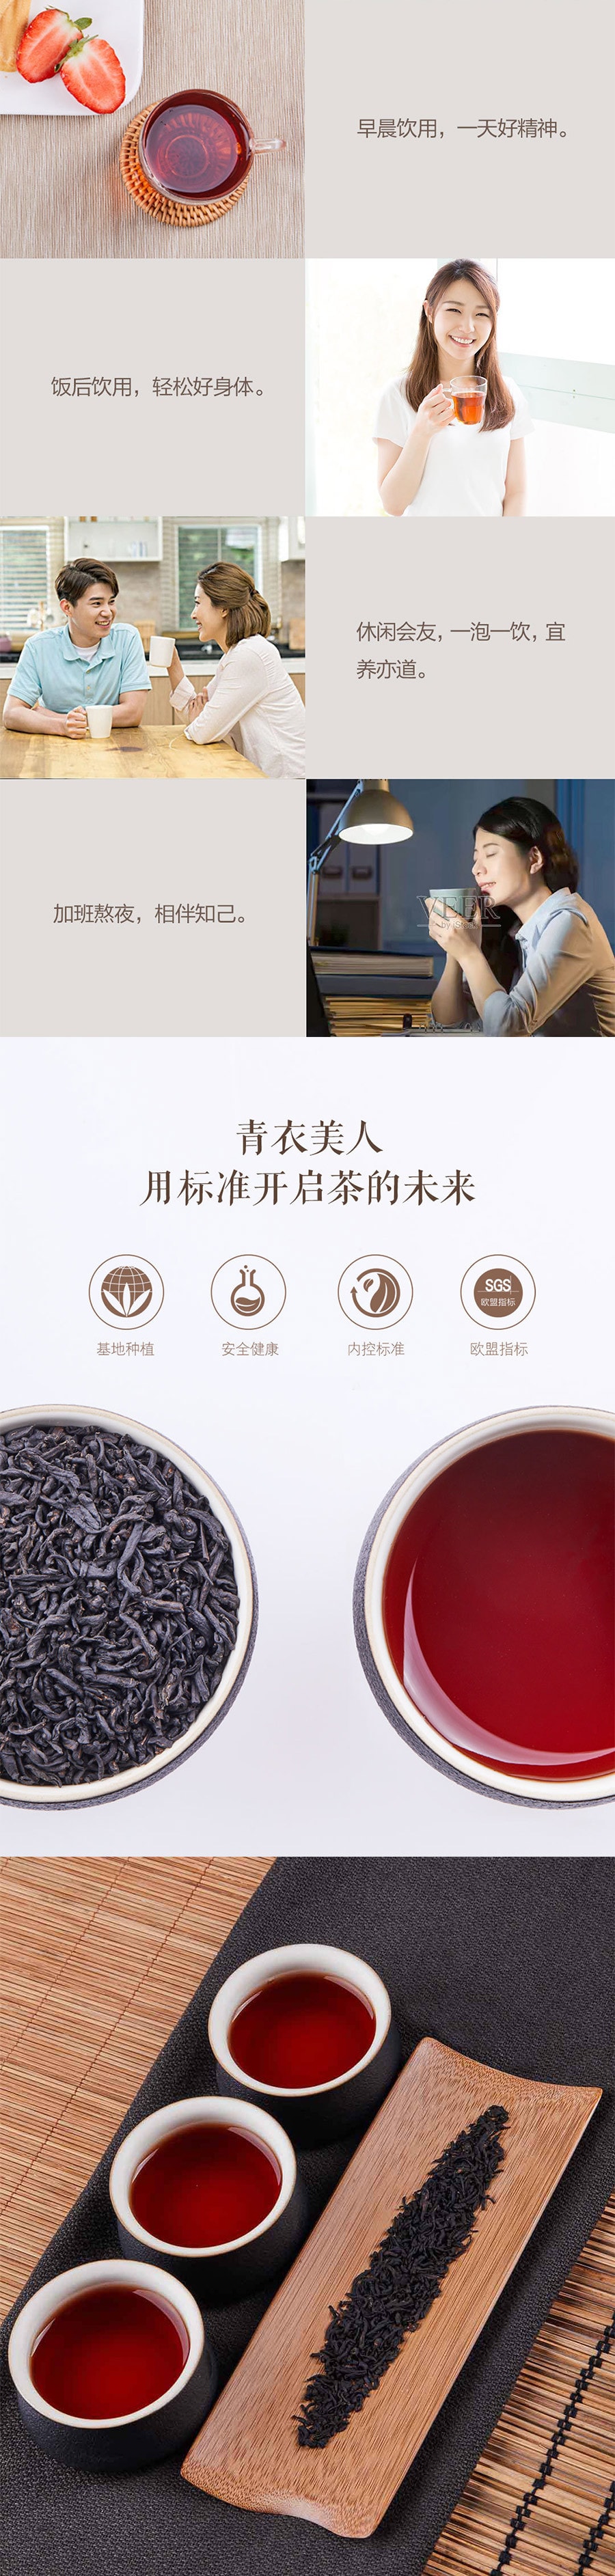 XIAOMI YOUPIN TSING-Yi BEAUTY IMPRESSION LANDSCAPE SERIES · No. 1 Black Tea 108g